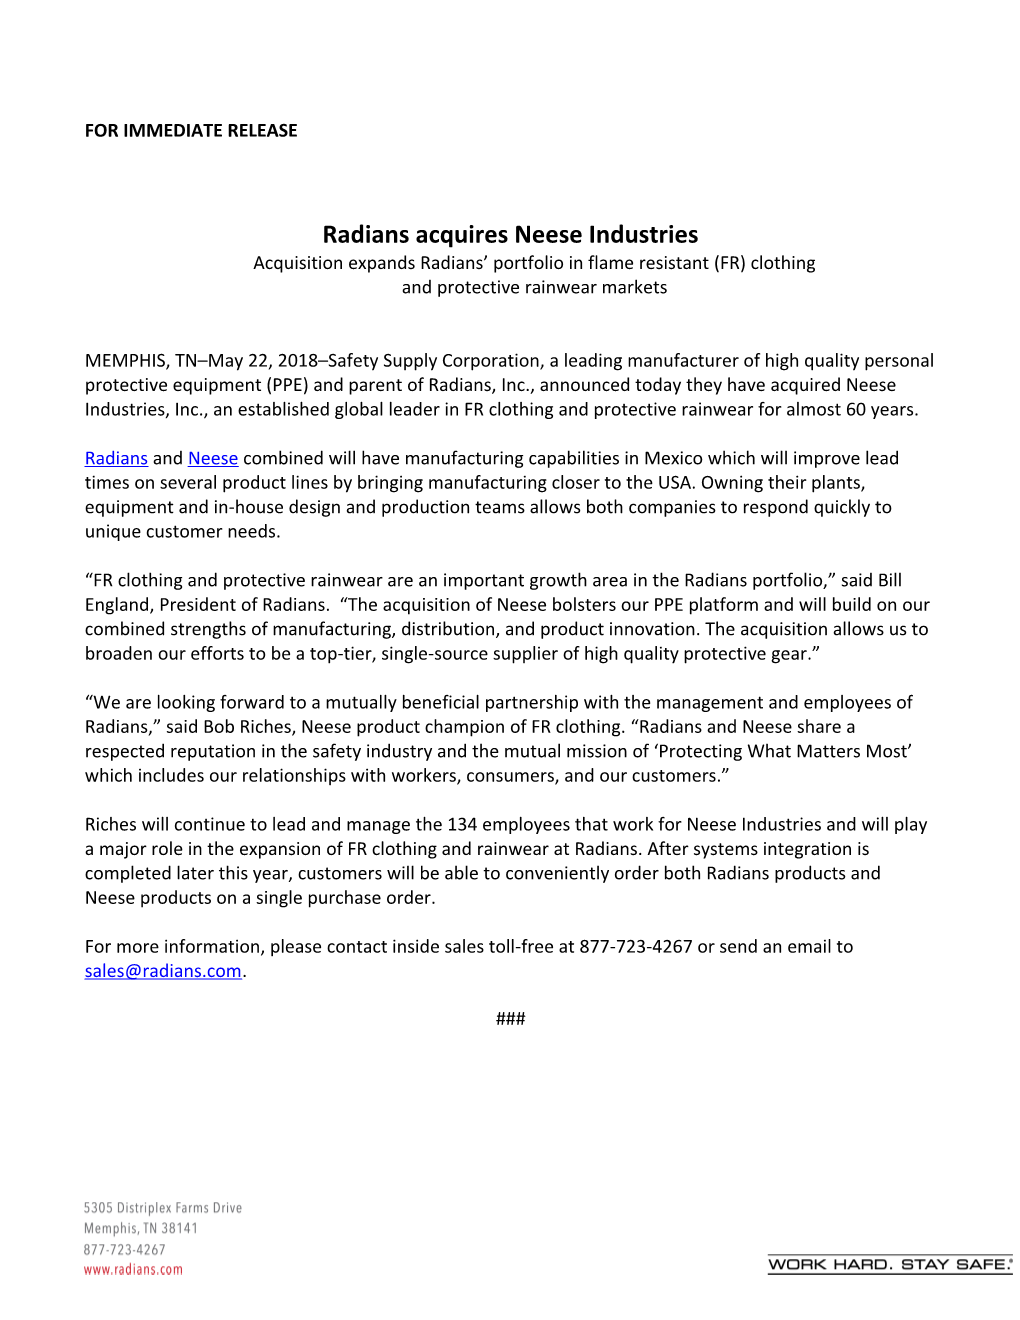 Radians Acquires Neese Industries